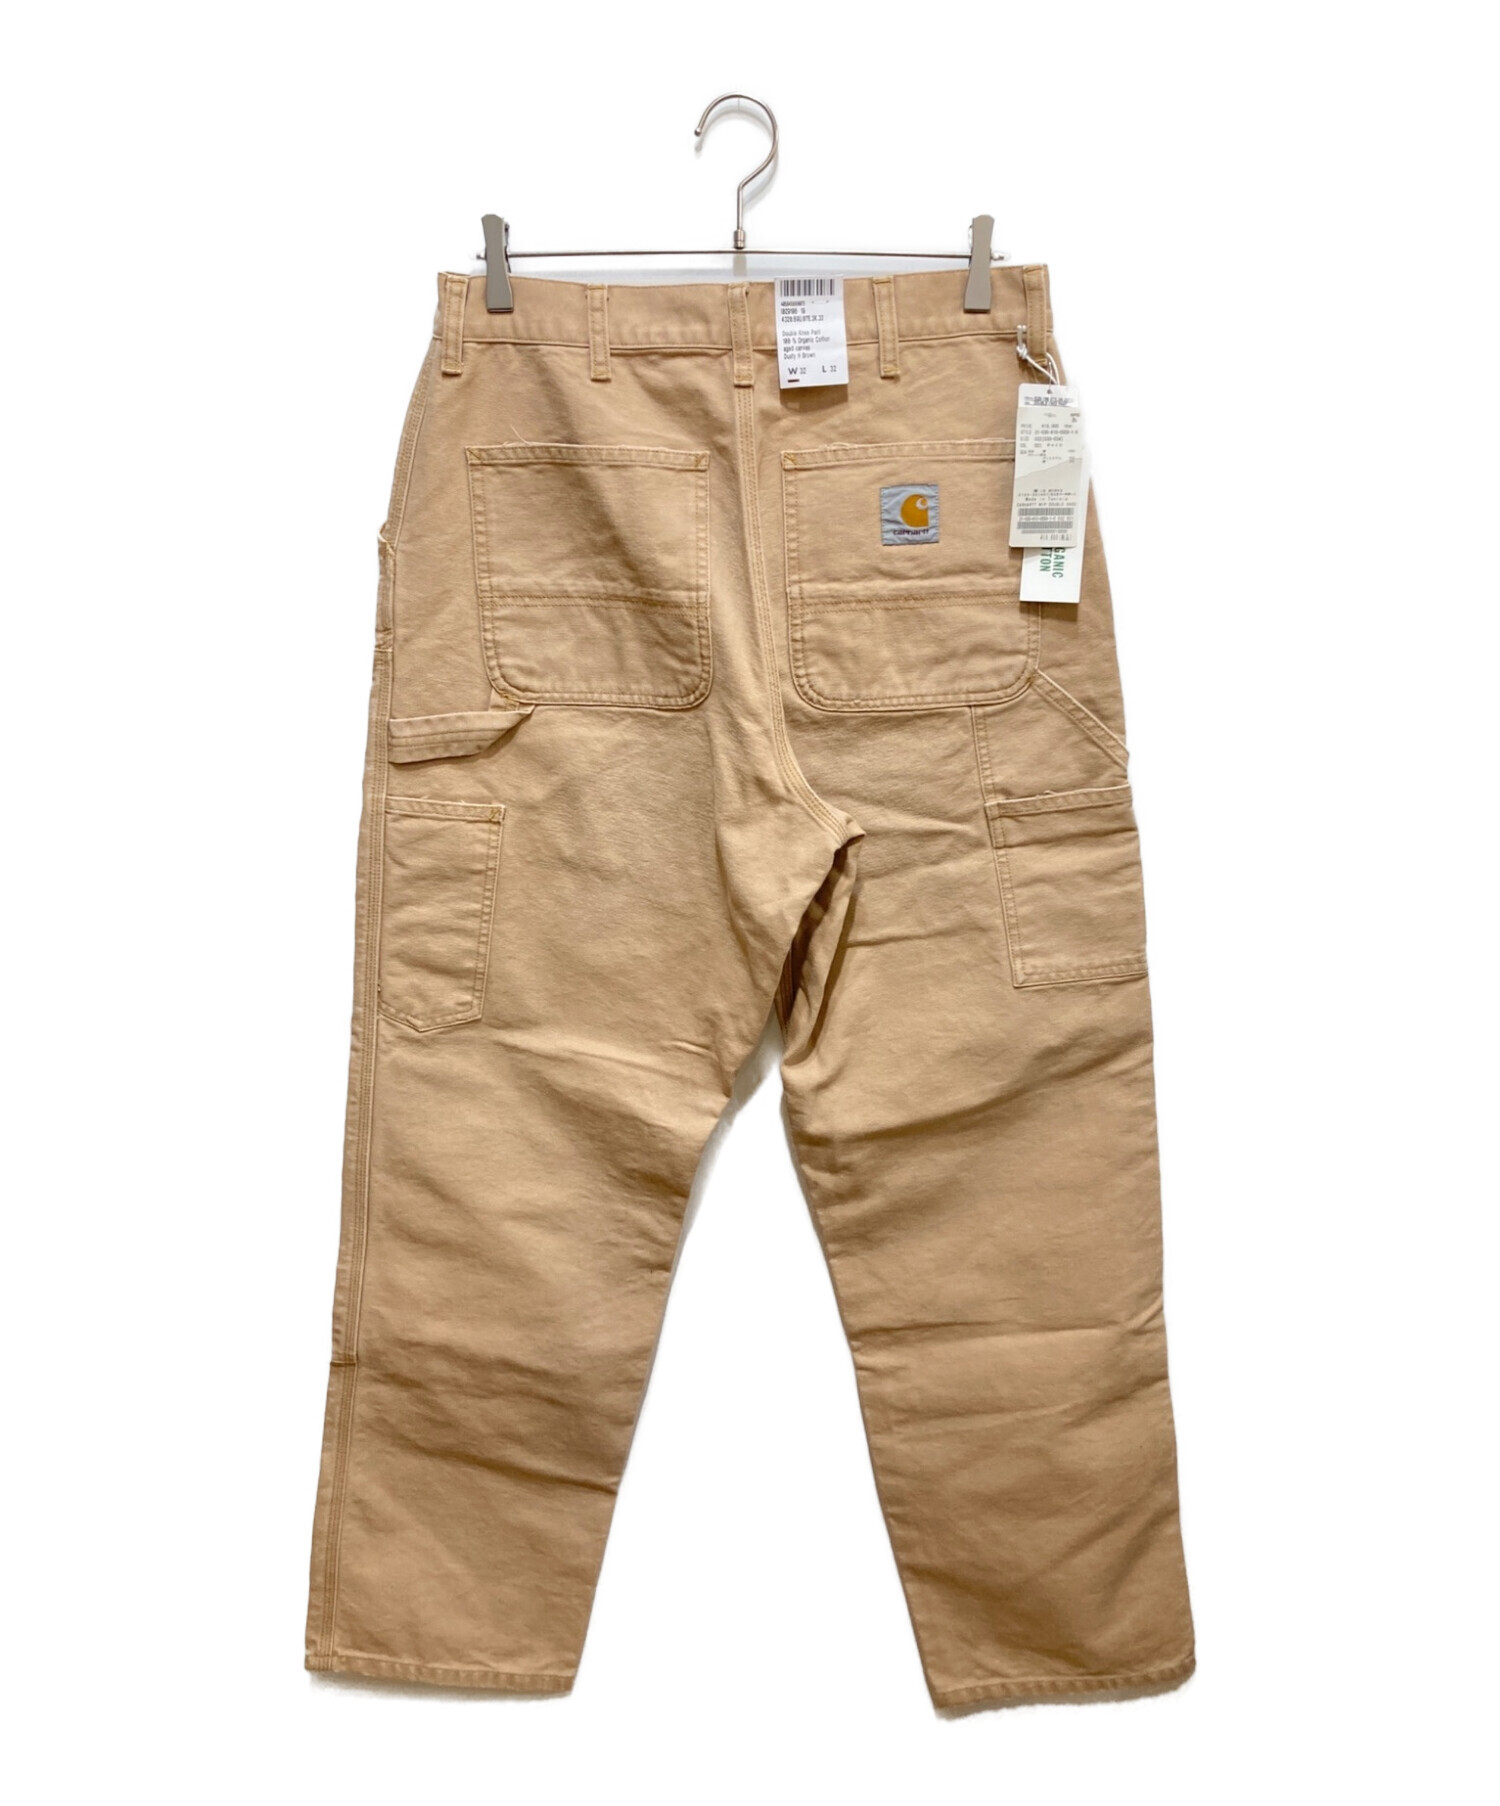 79cm32×32 carhartt double knee painter pants